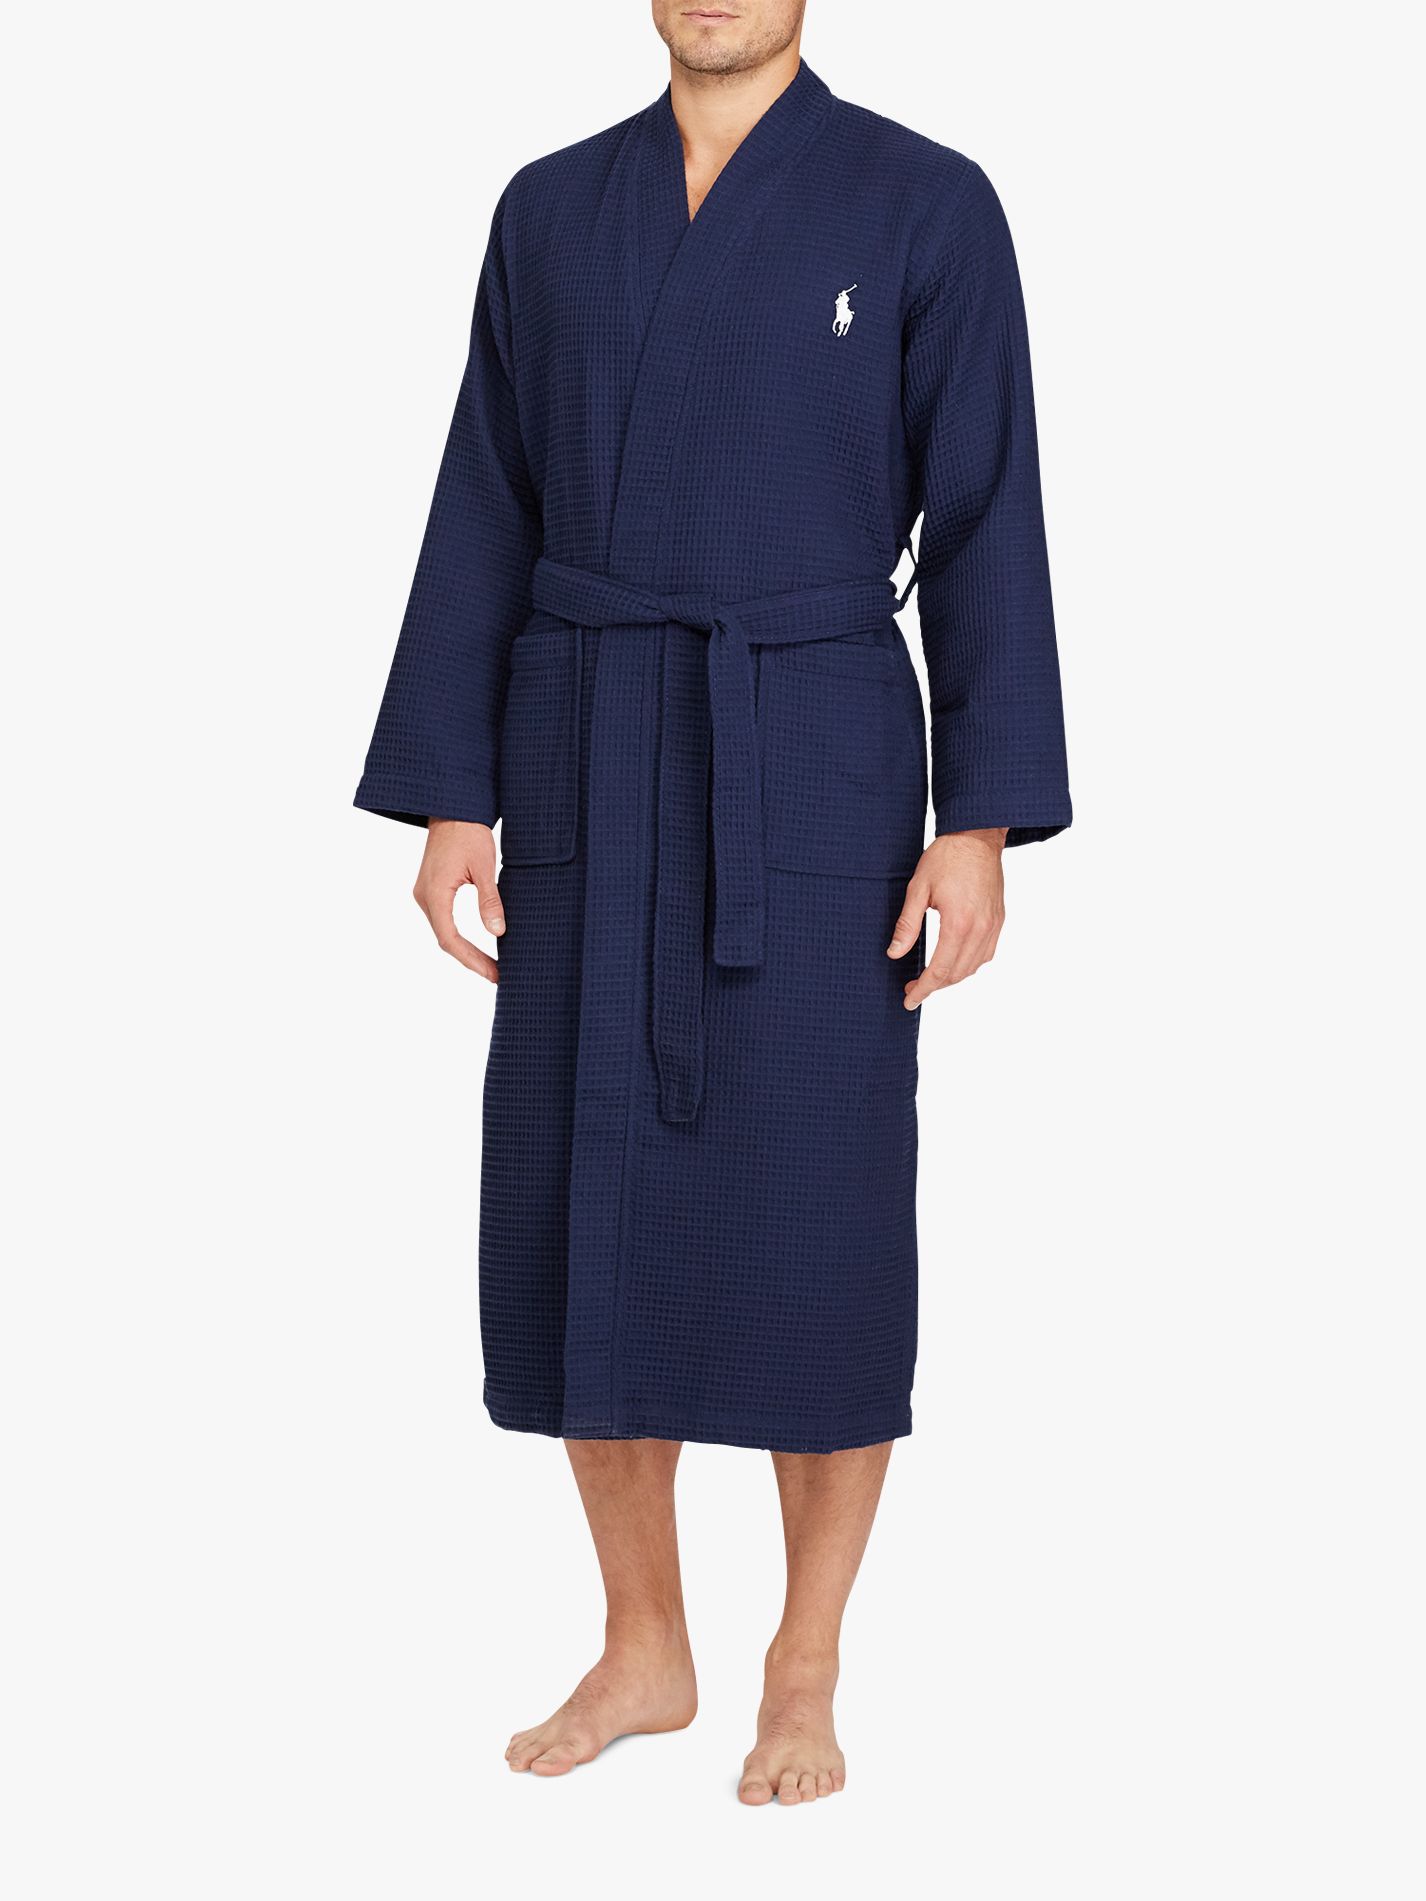 ralph lauren bathrobe